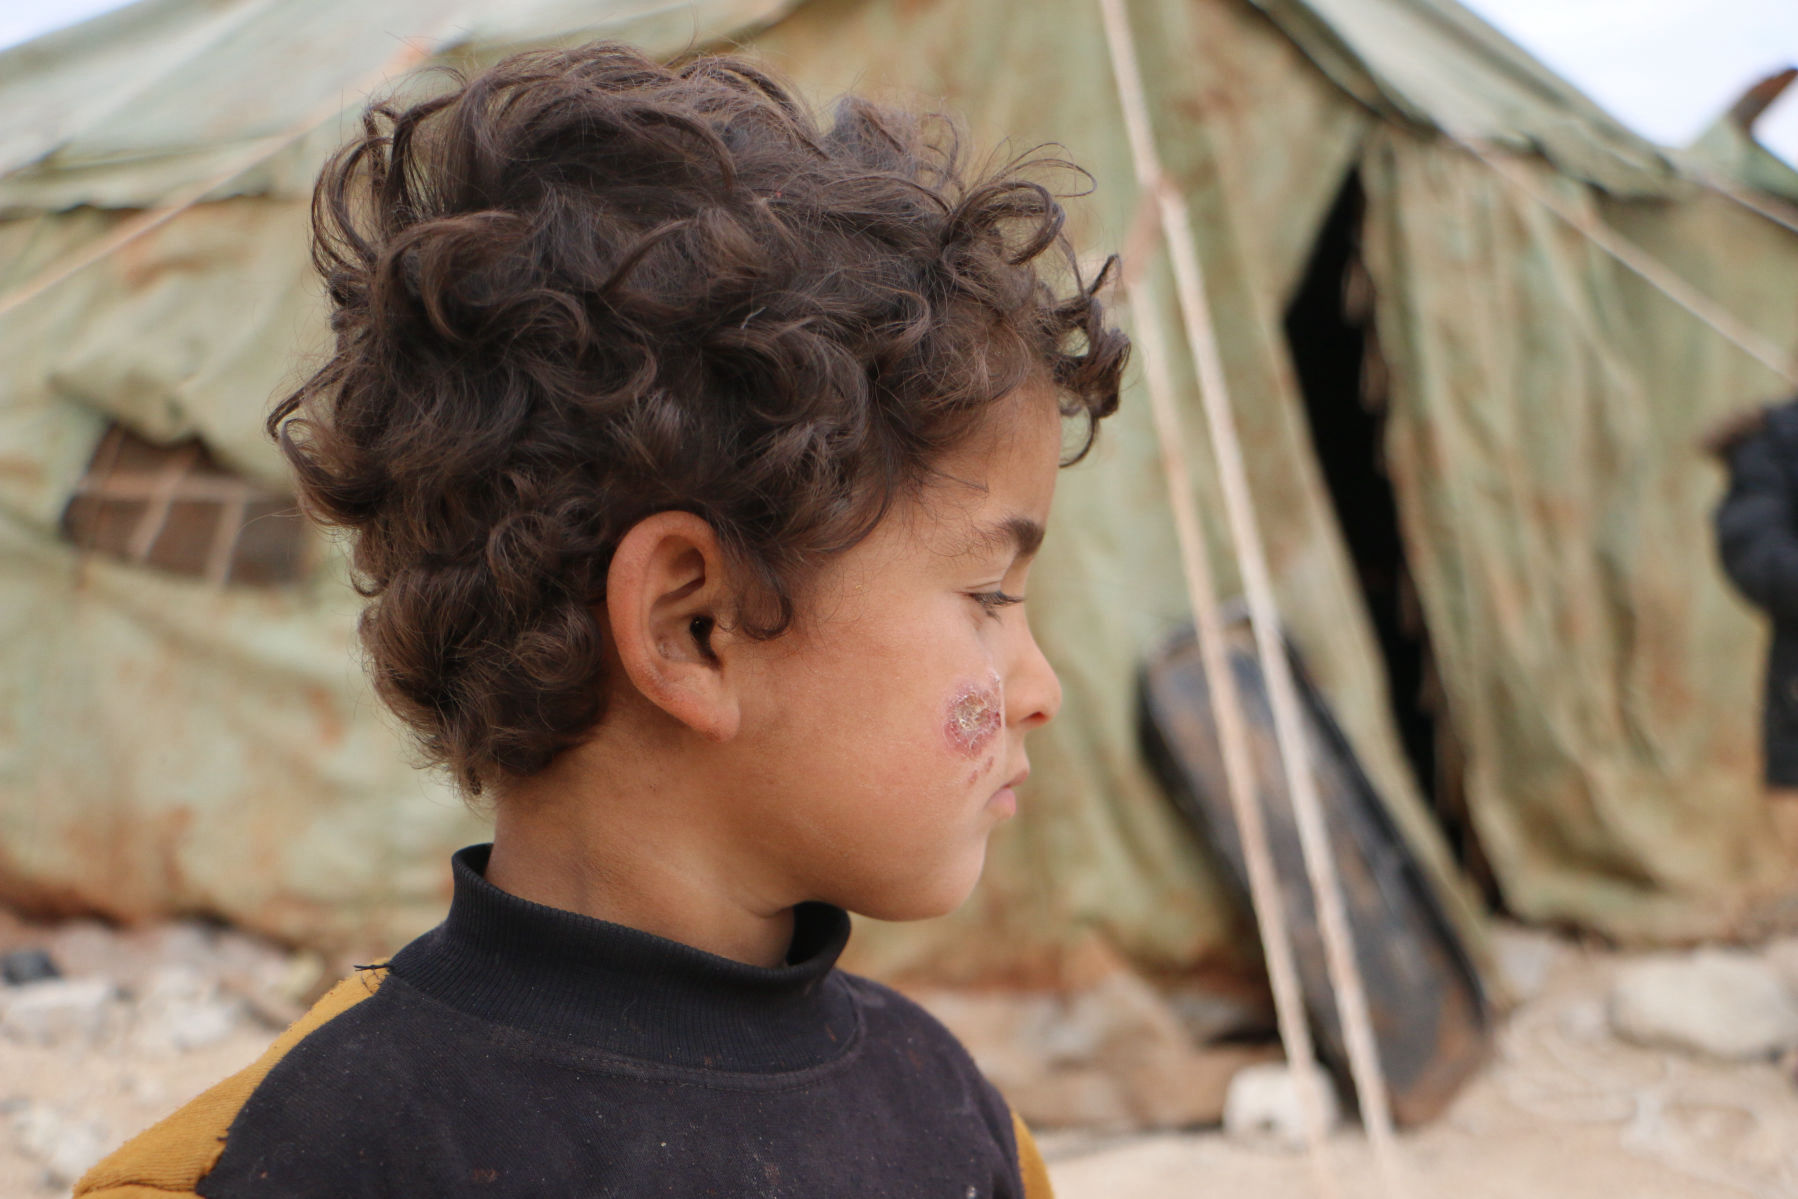 Case of cutaneous leishmaniasis in Deir Hassan camp, Syria. Photo by Abdul Majeed Al Qareh.